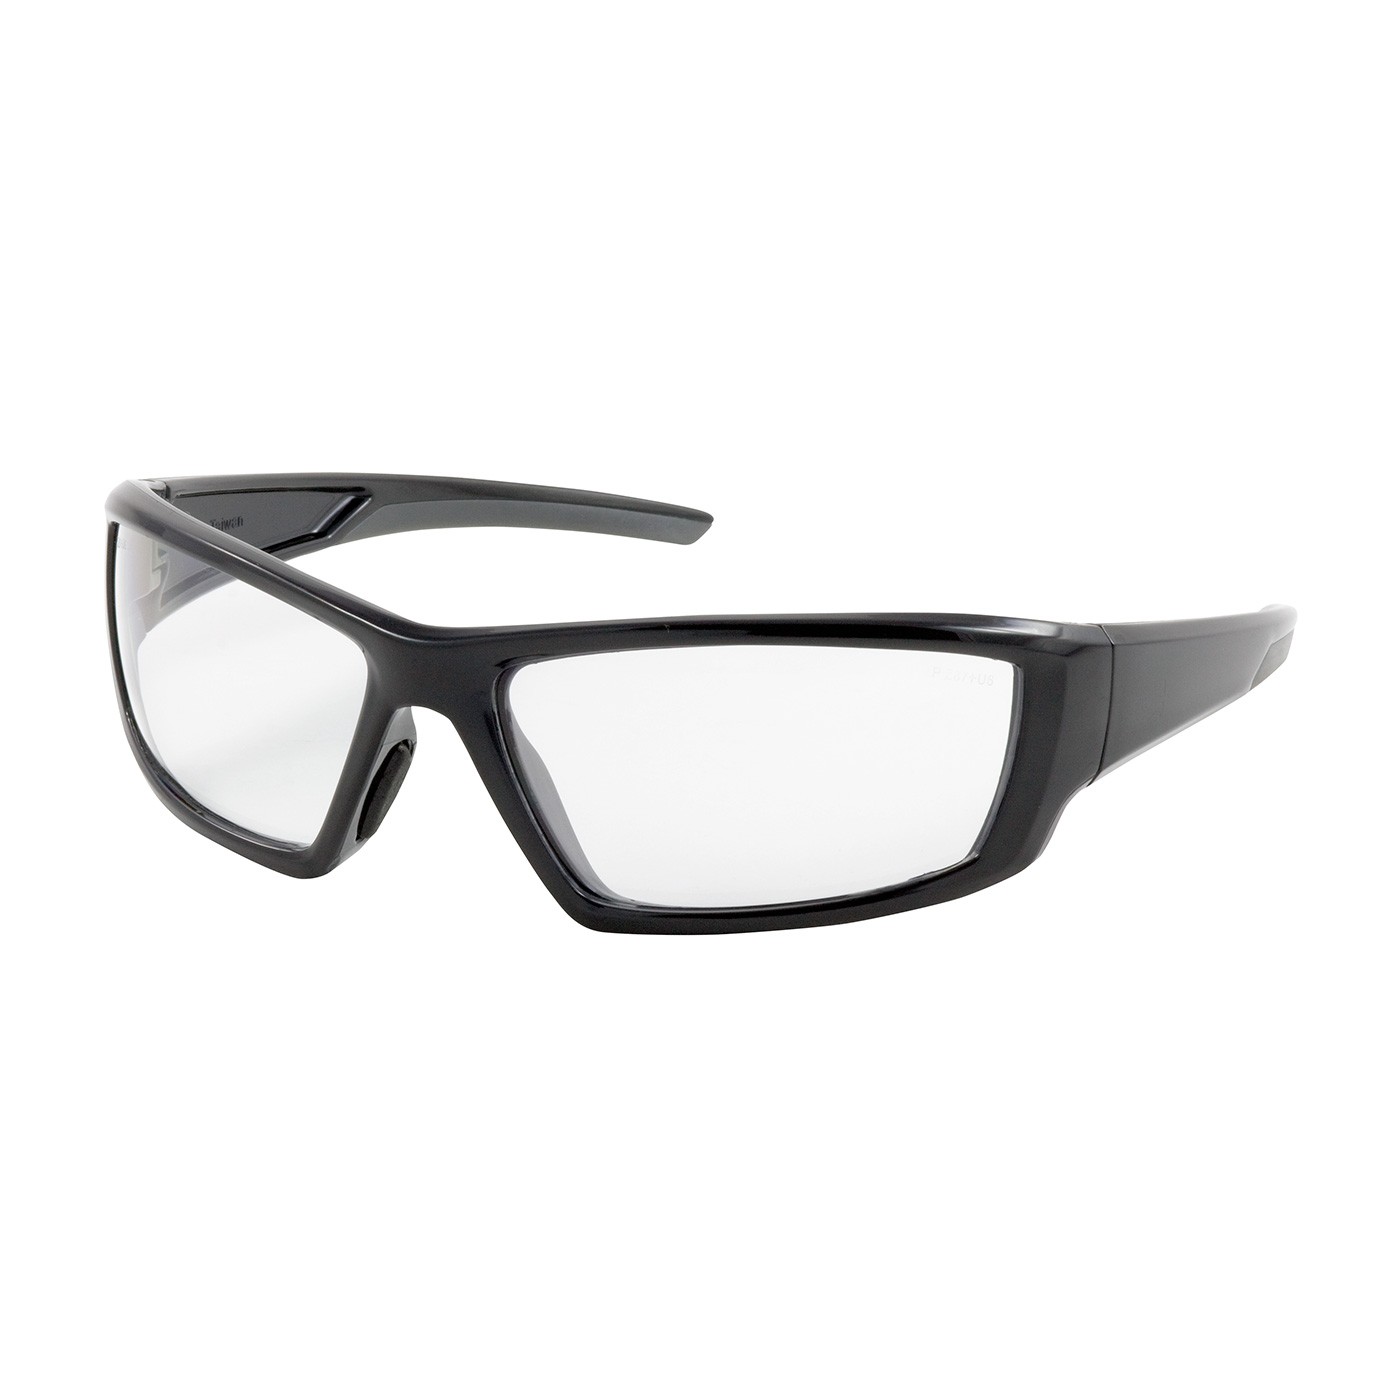 Sunburst™ Full Frame Safety Glasses with Black Frame, Clear Lens and Anti-Scratch / Anti-Fog Coating  (#250-47-0020)